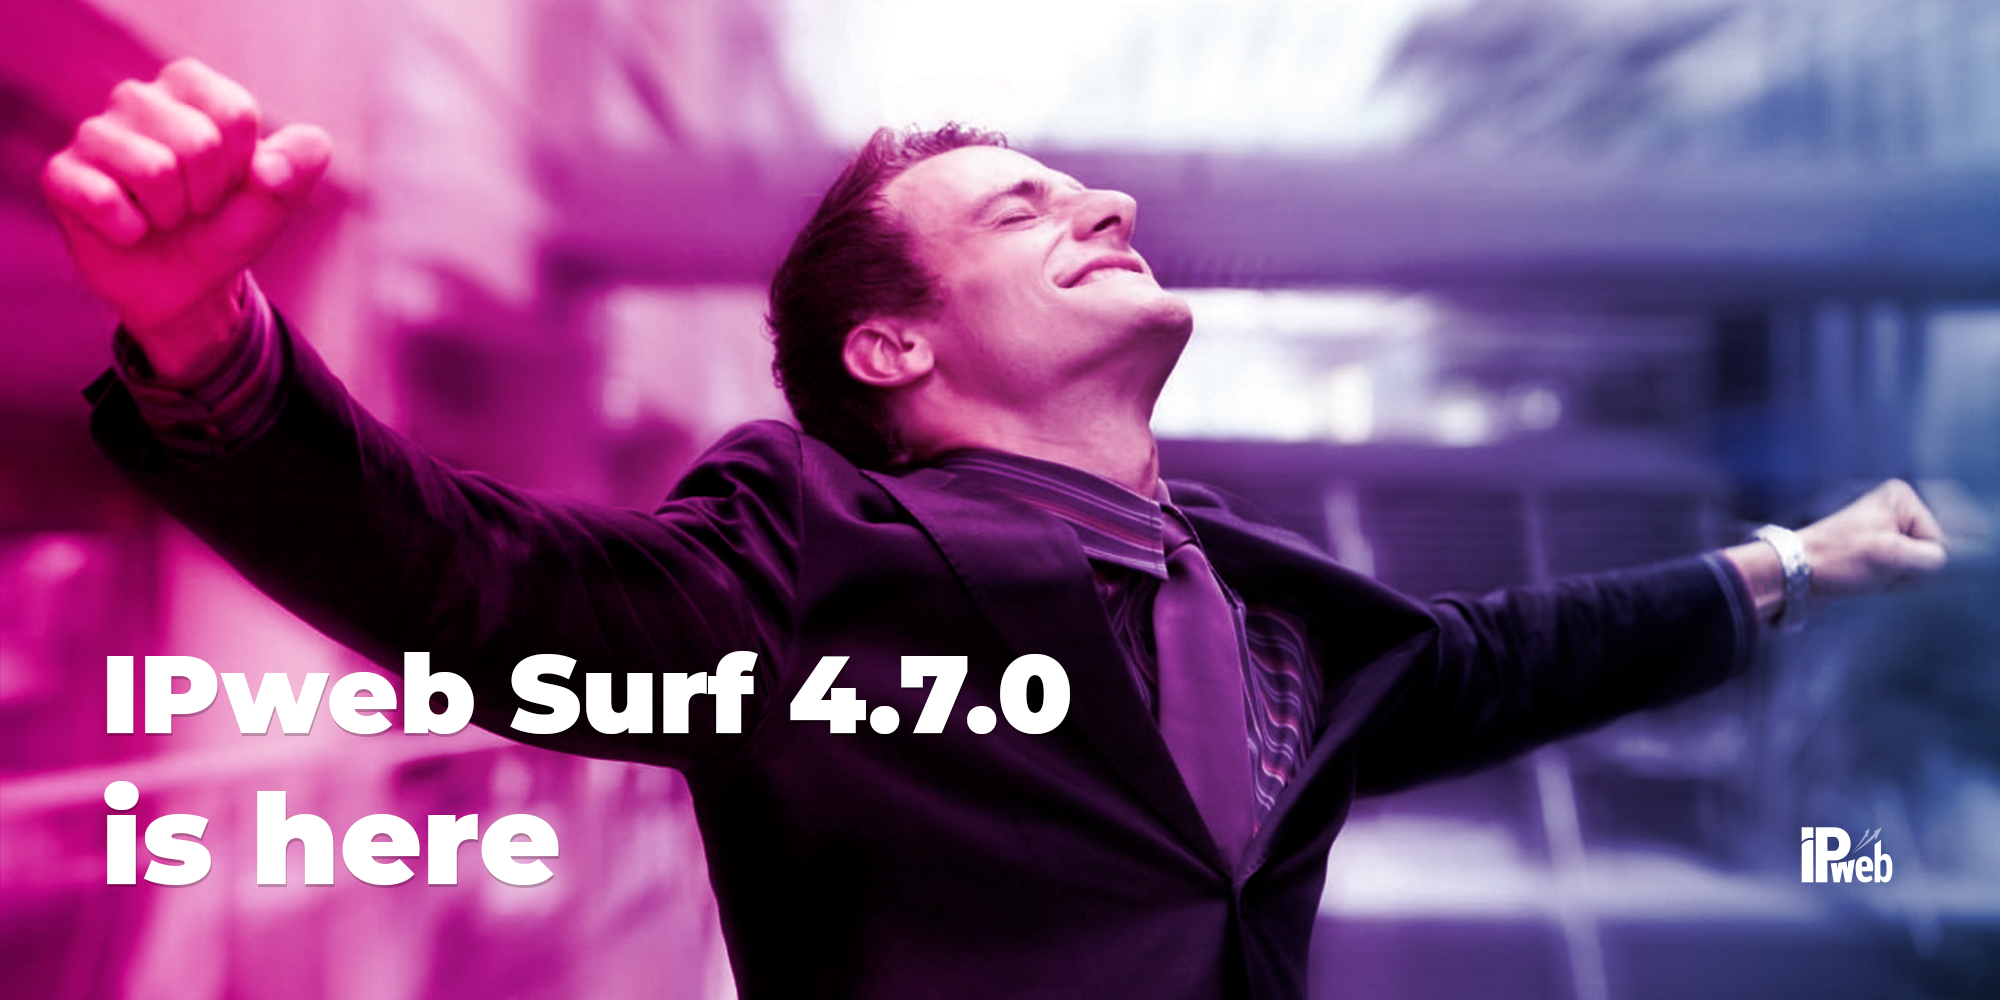 New version of IPweb Surf